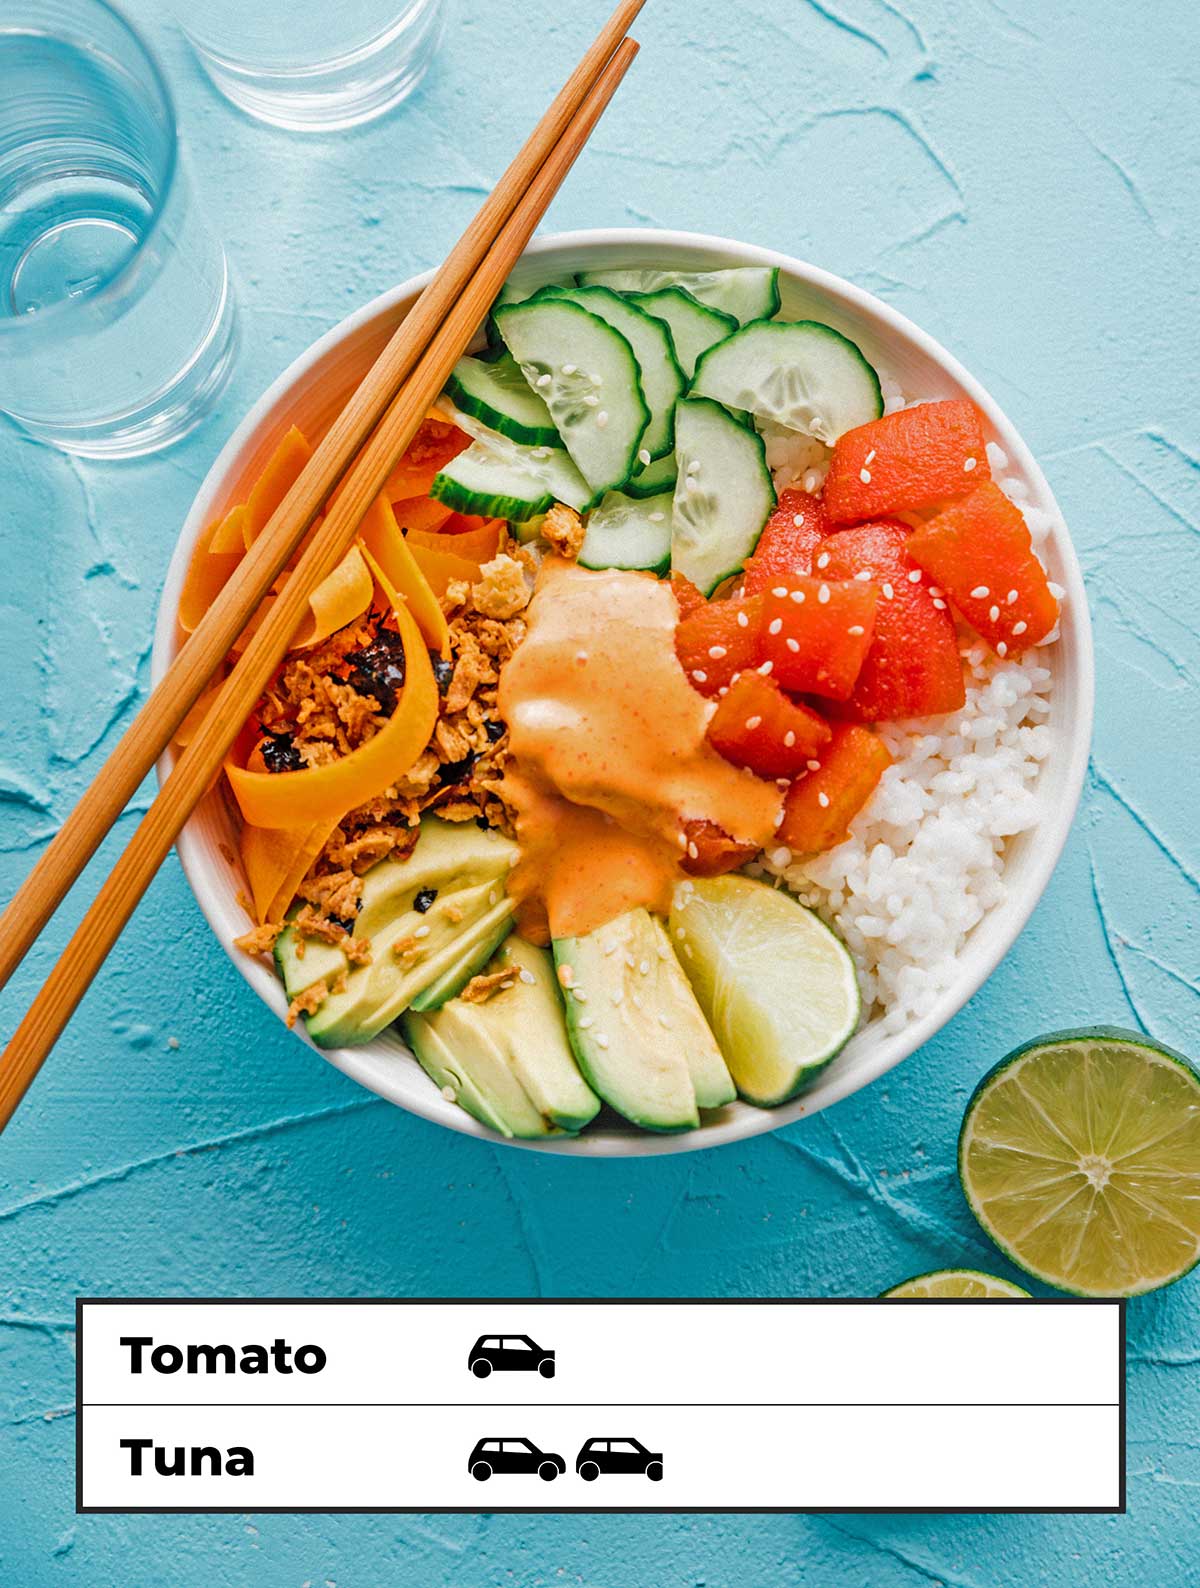 Tomato tuna sushi bowl for reducing carbon footprint